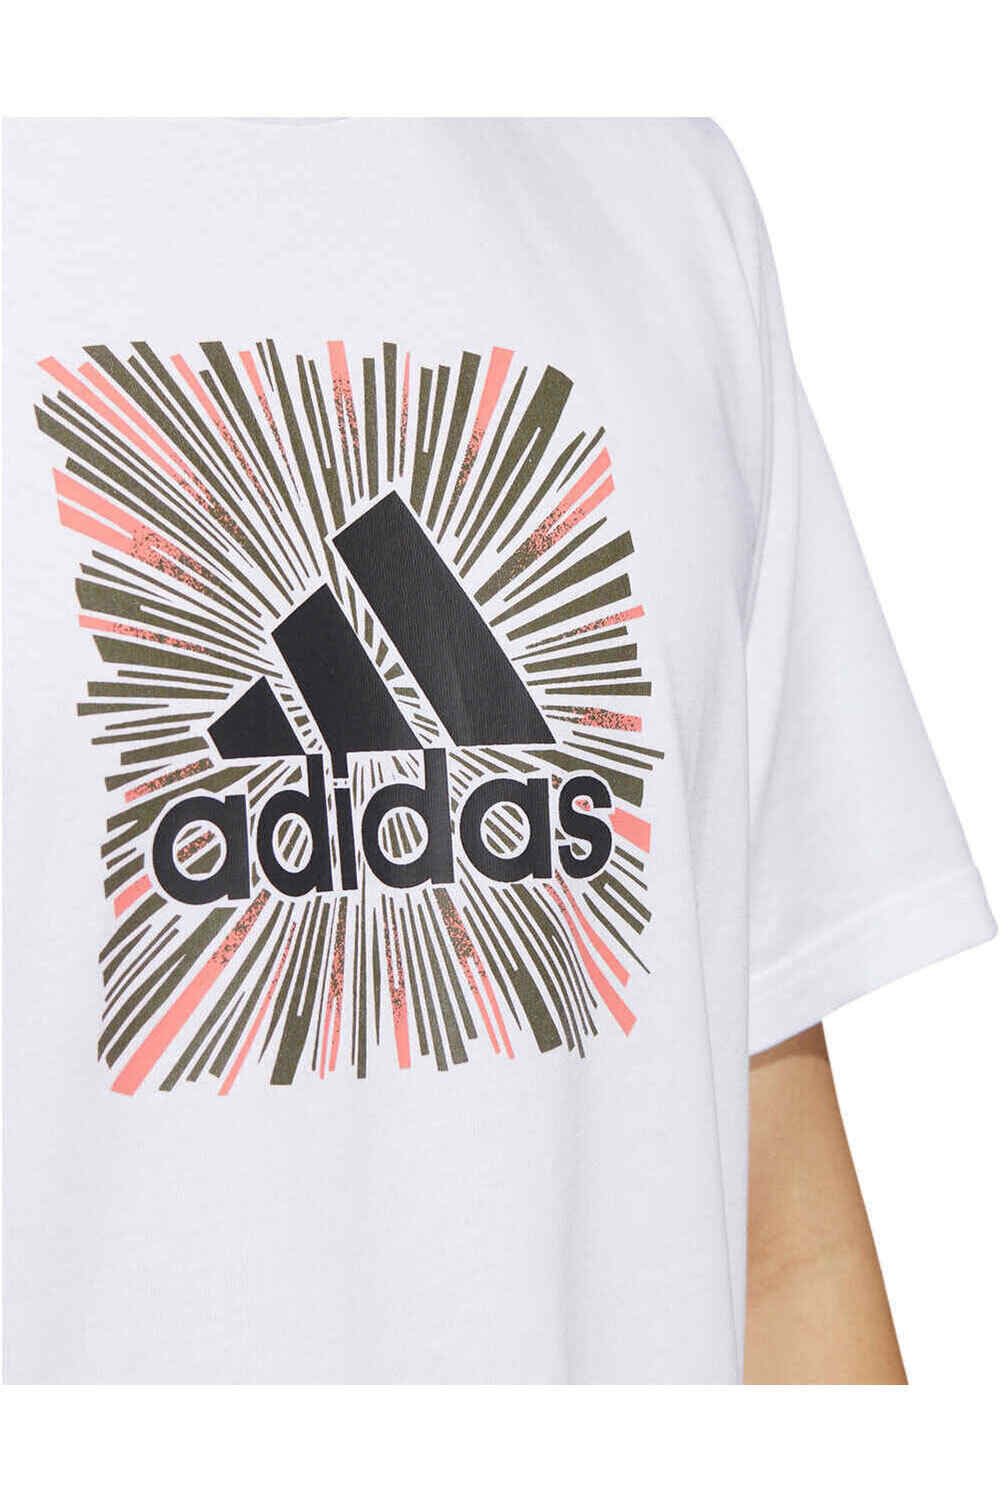 adidas camiseta manga corta hombre Sport Optimist 3 bandas Sportswear Graphic de manga corta vista detalle